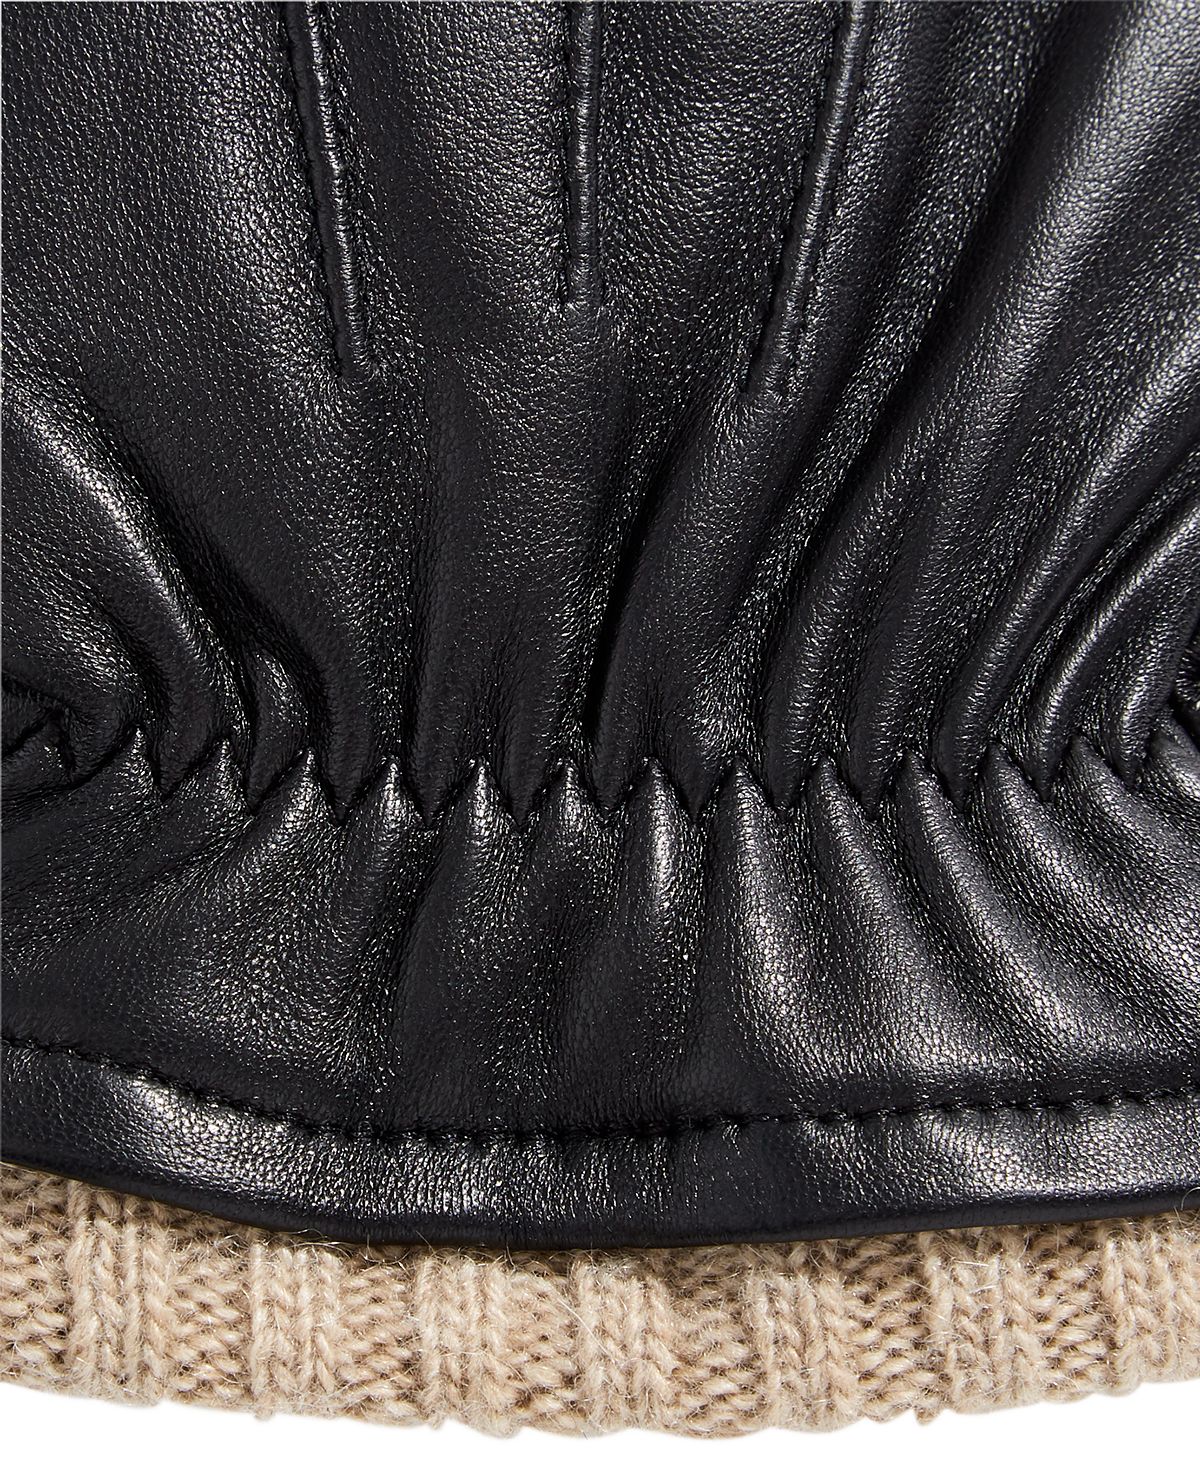 Club Room Leather Gloves Black